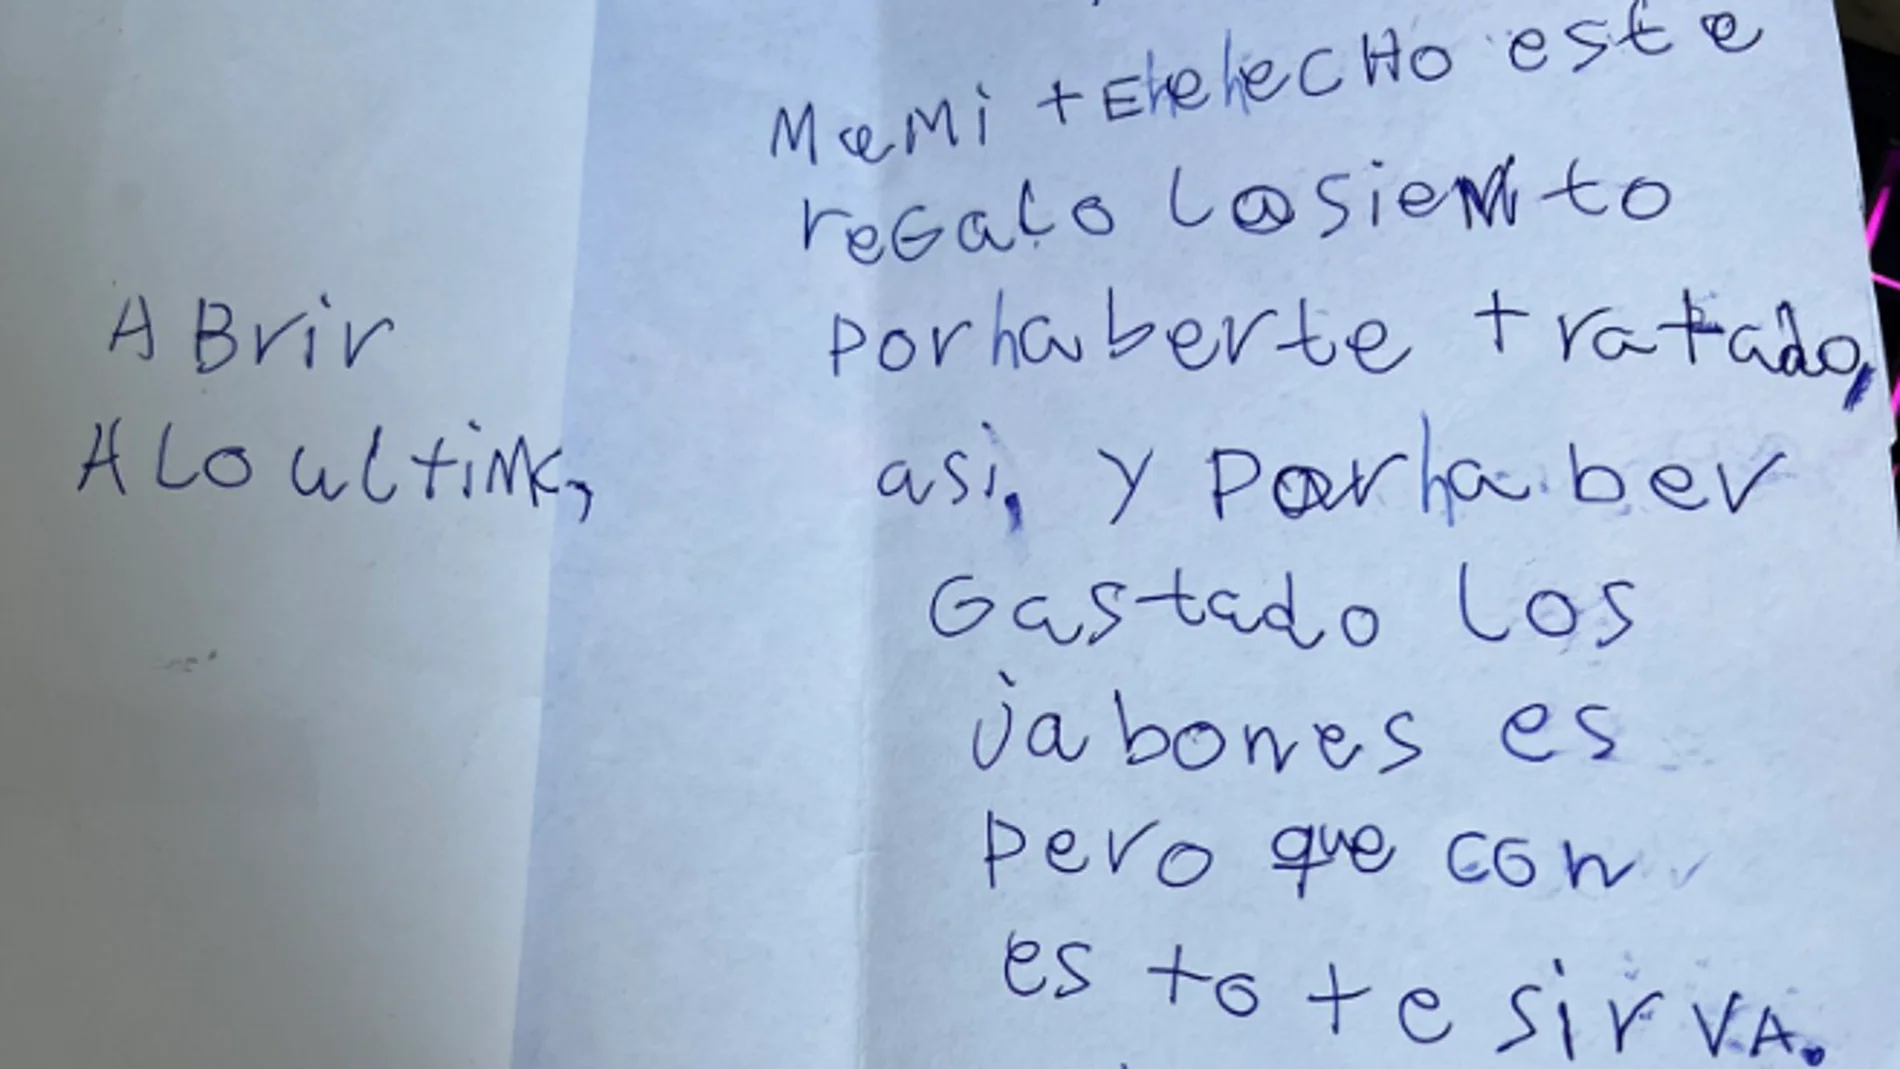 Carta de disculpas de un niño a su madre